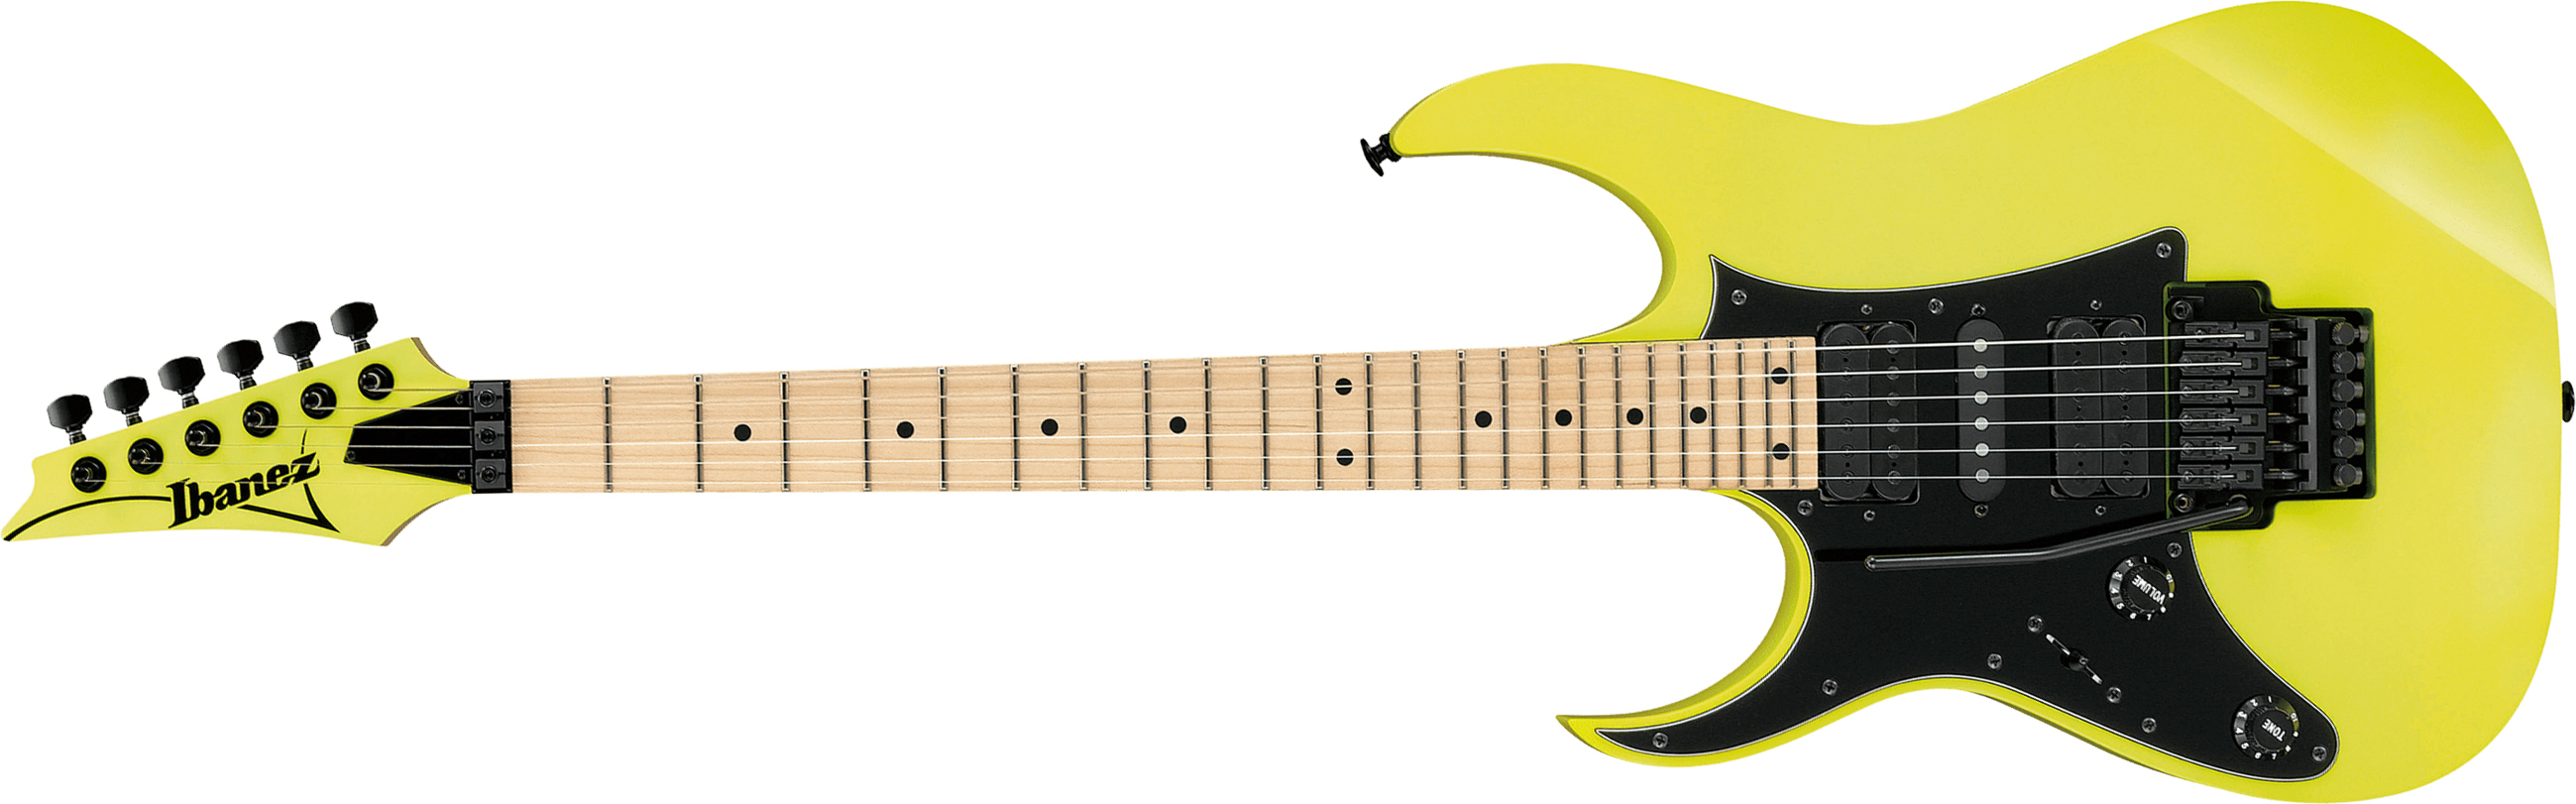 Ibanez Rg550l Dy Genesis Jap Lh Gaucher Hsh Fr Mn - Desert Sun Yellow - Left-handed electric guitar - Main picture